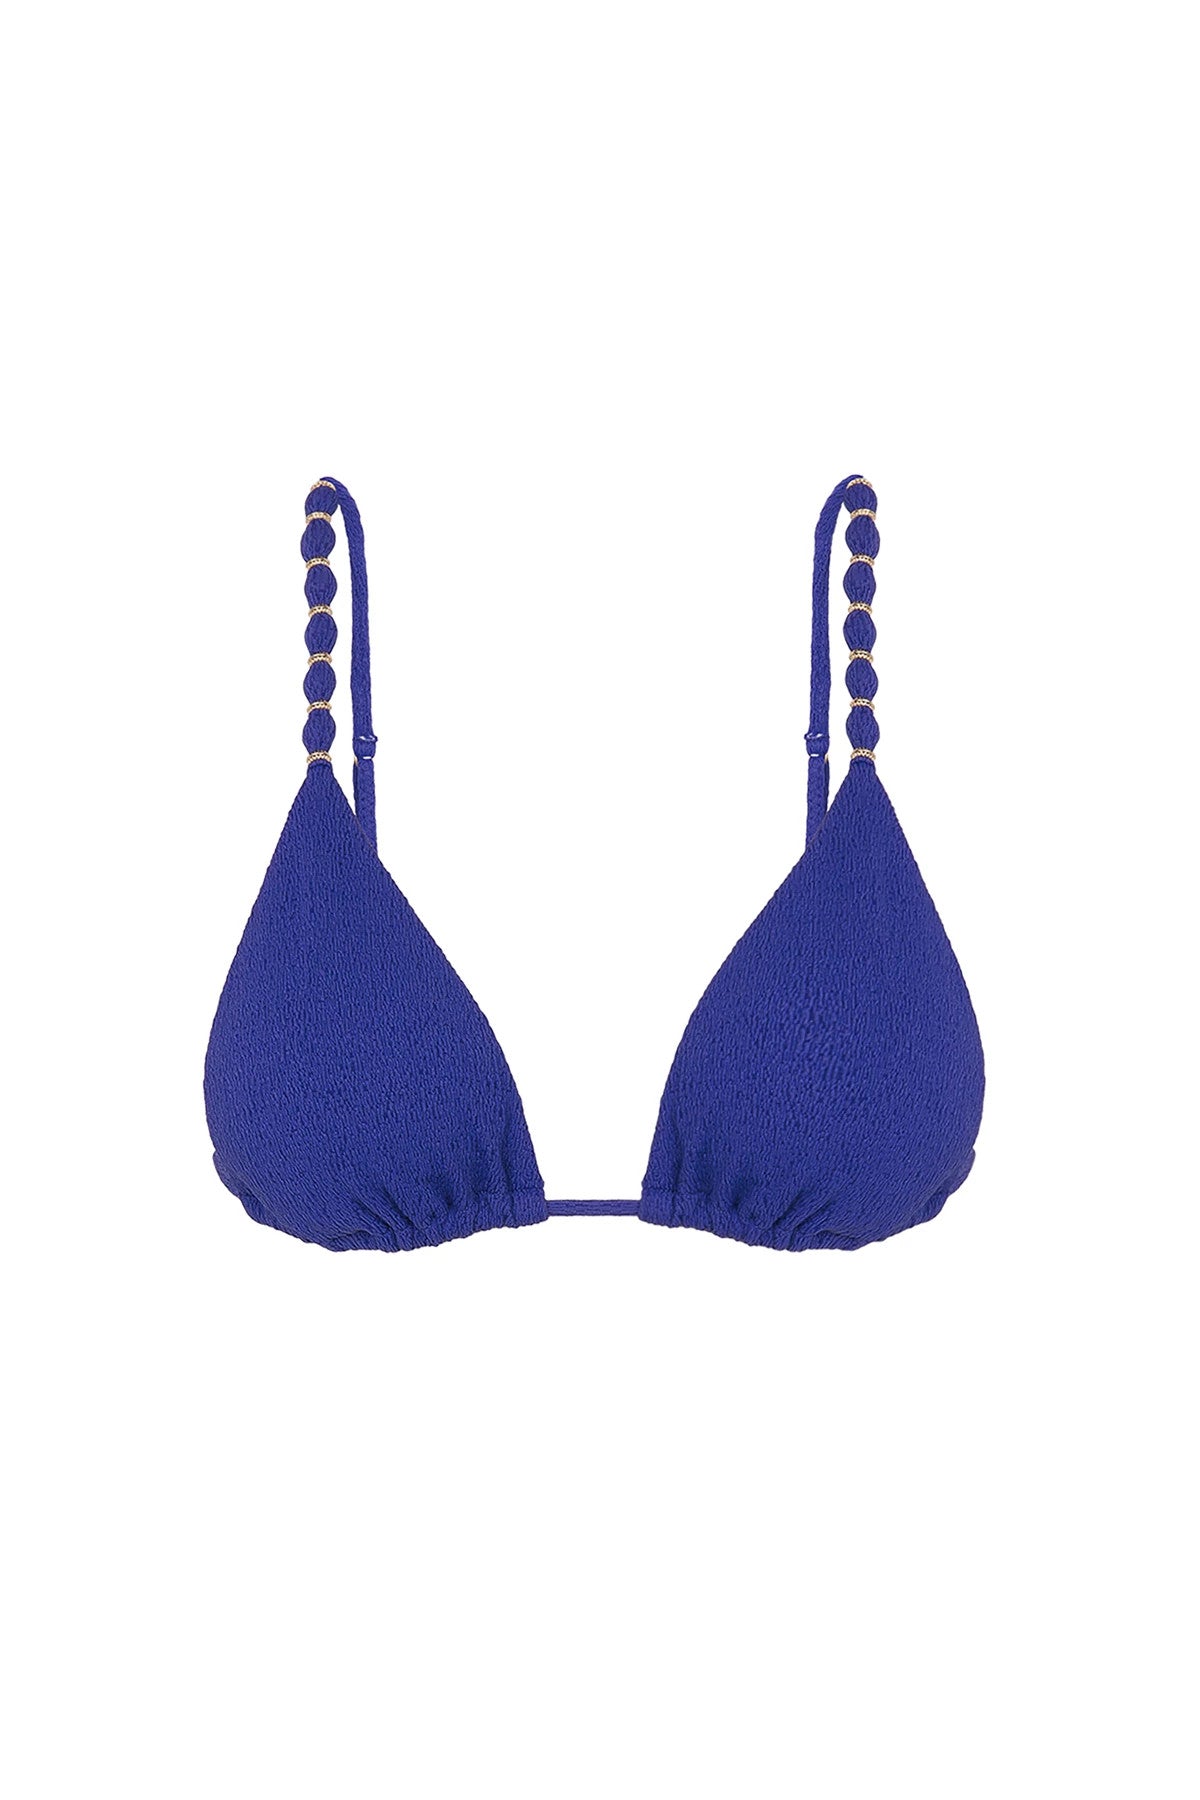 Vix Swimwear Women's Parallel Sliding Triangle Bikini Top - BLUE OCEAN